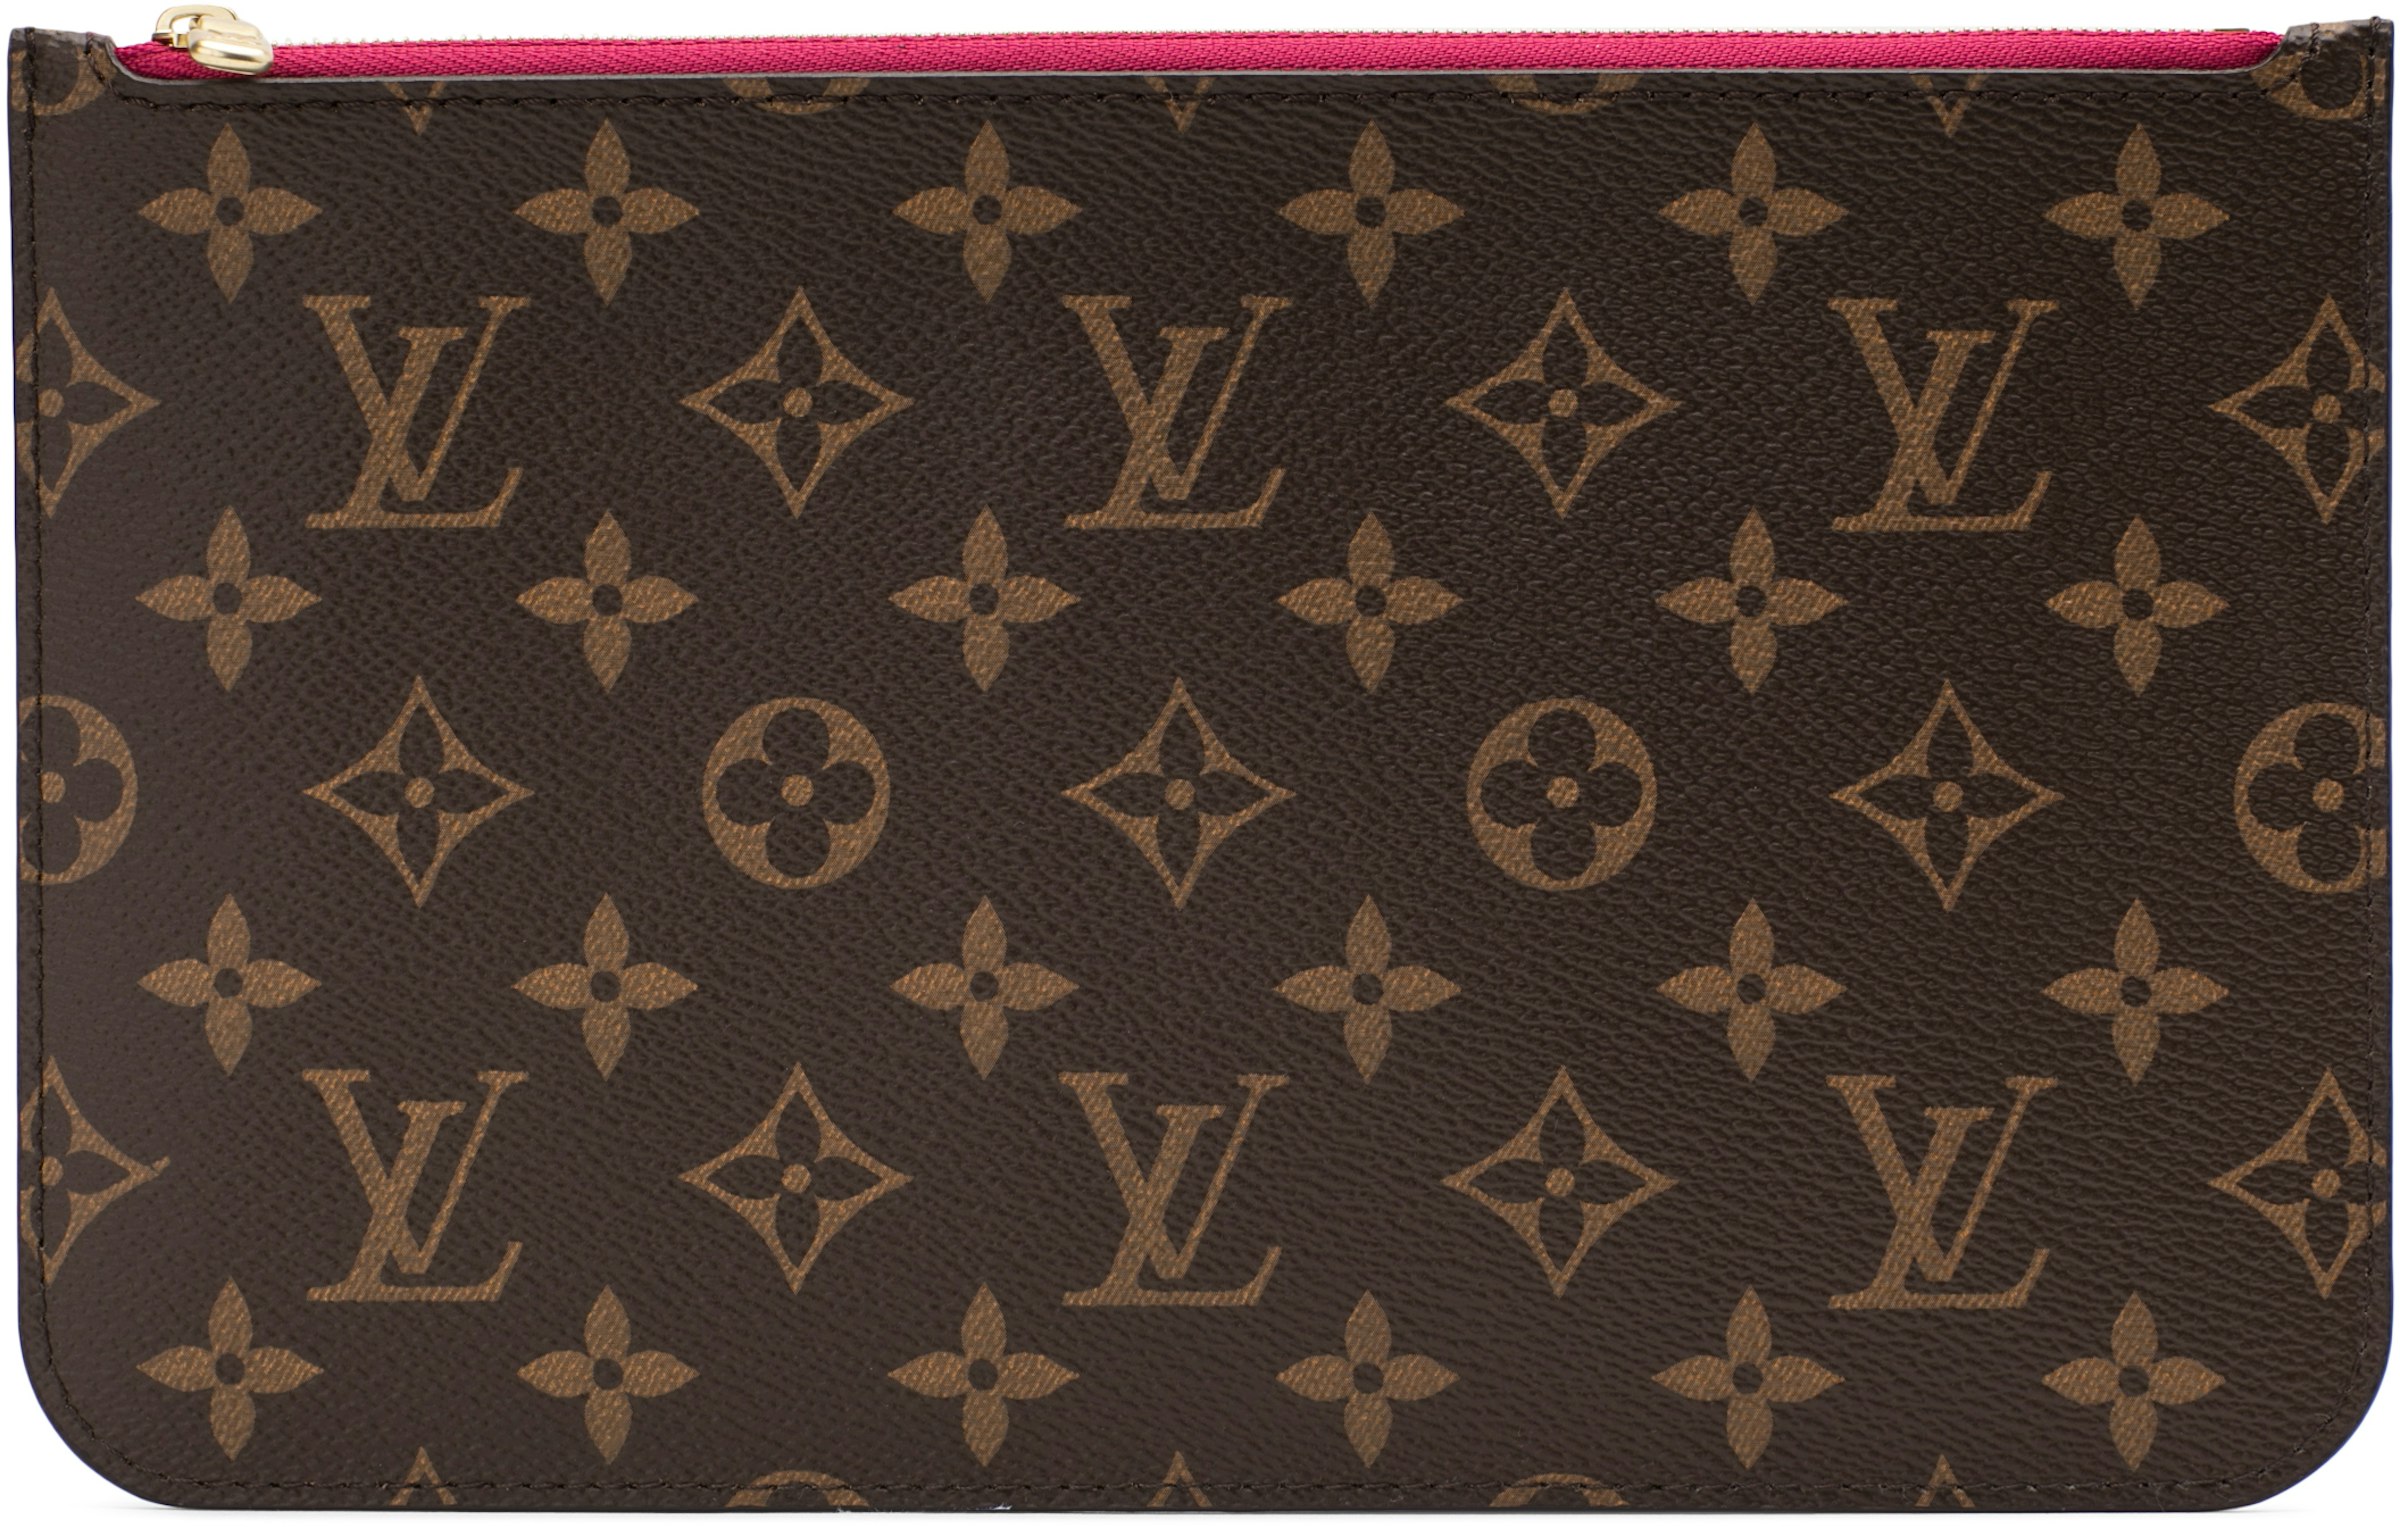 Louis Vuitton Pm Mm Gm Sizes